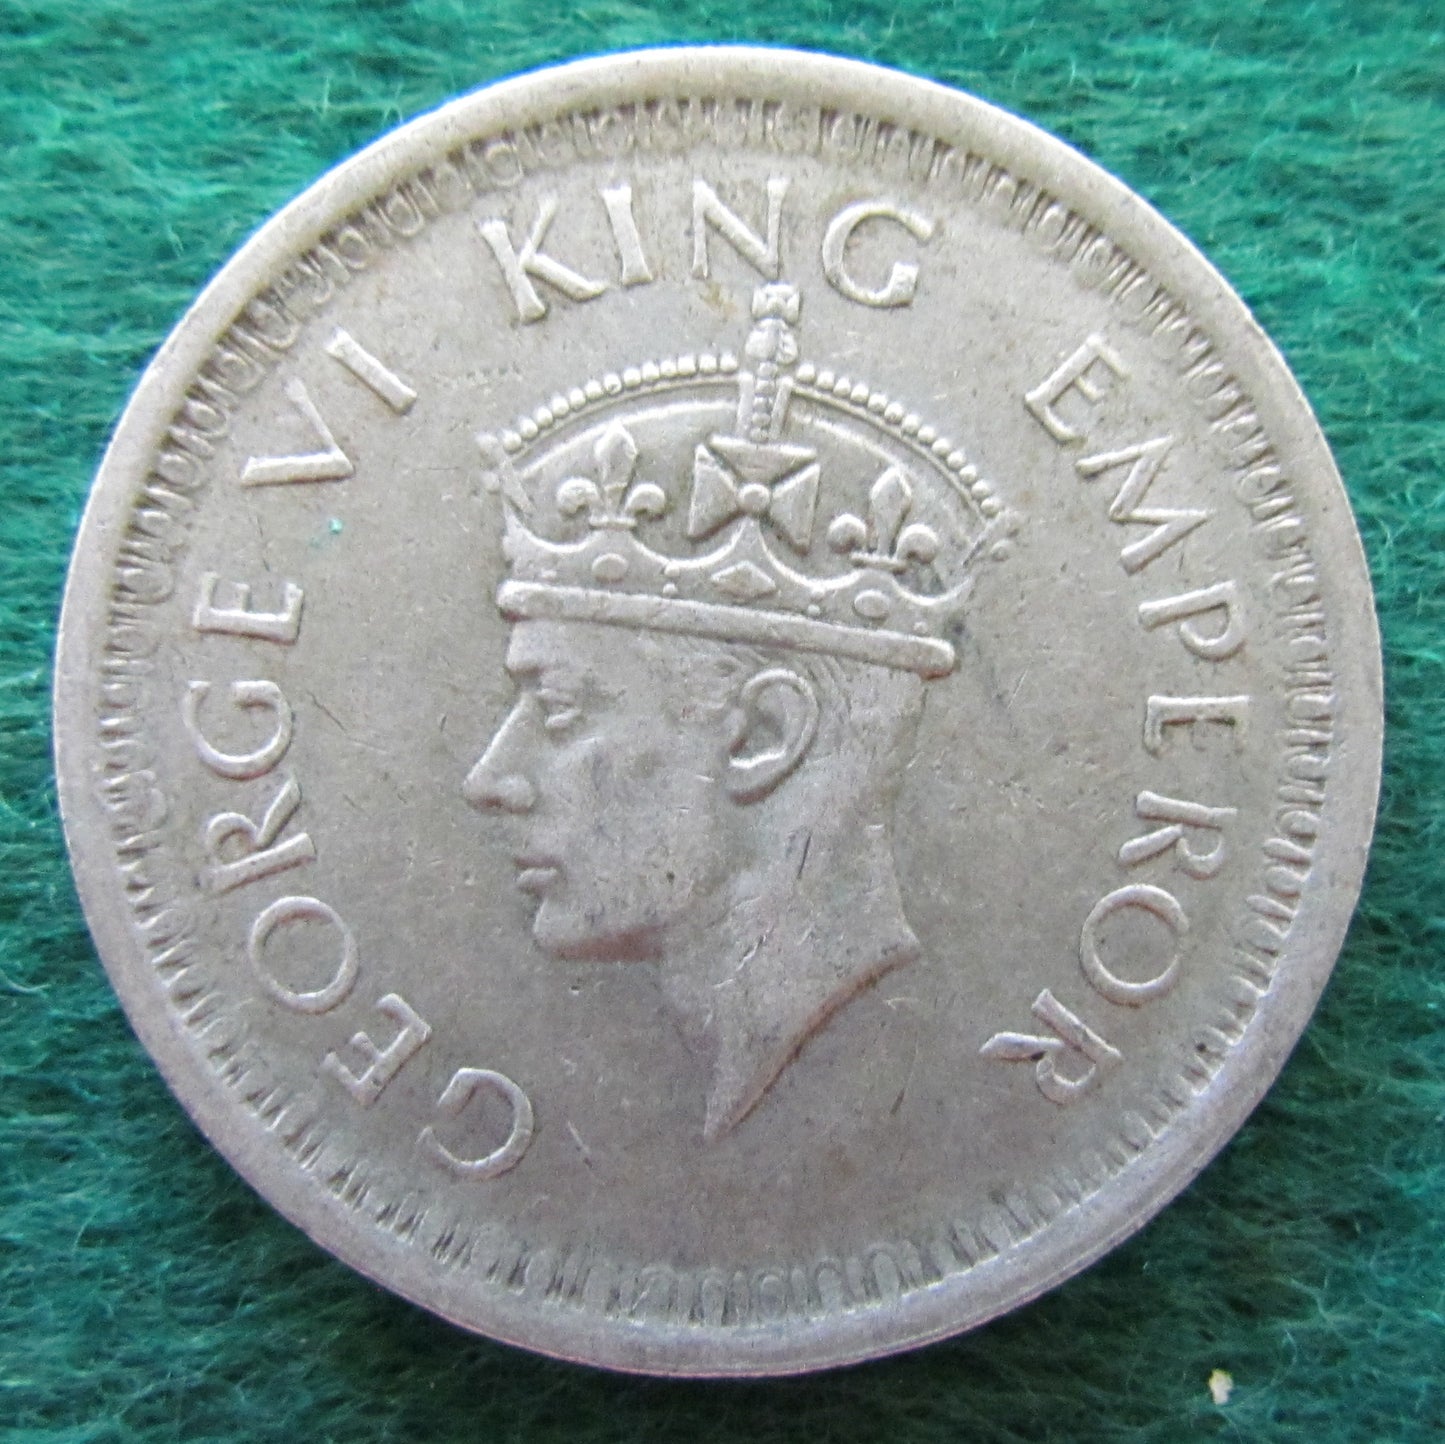 India 1945 1 Rupee Coin - Circulated